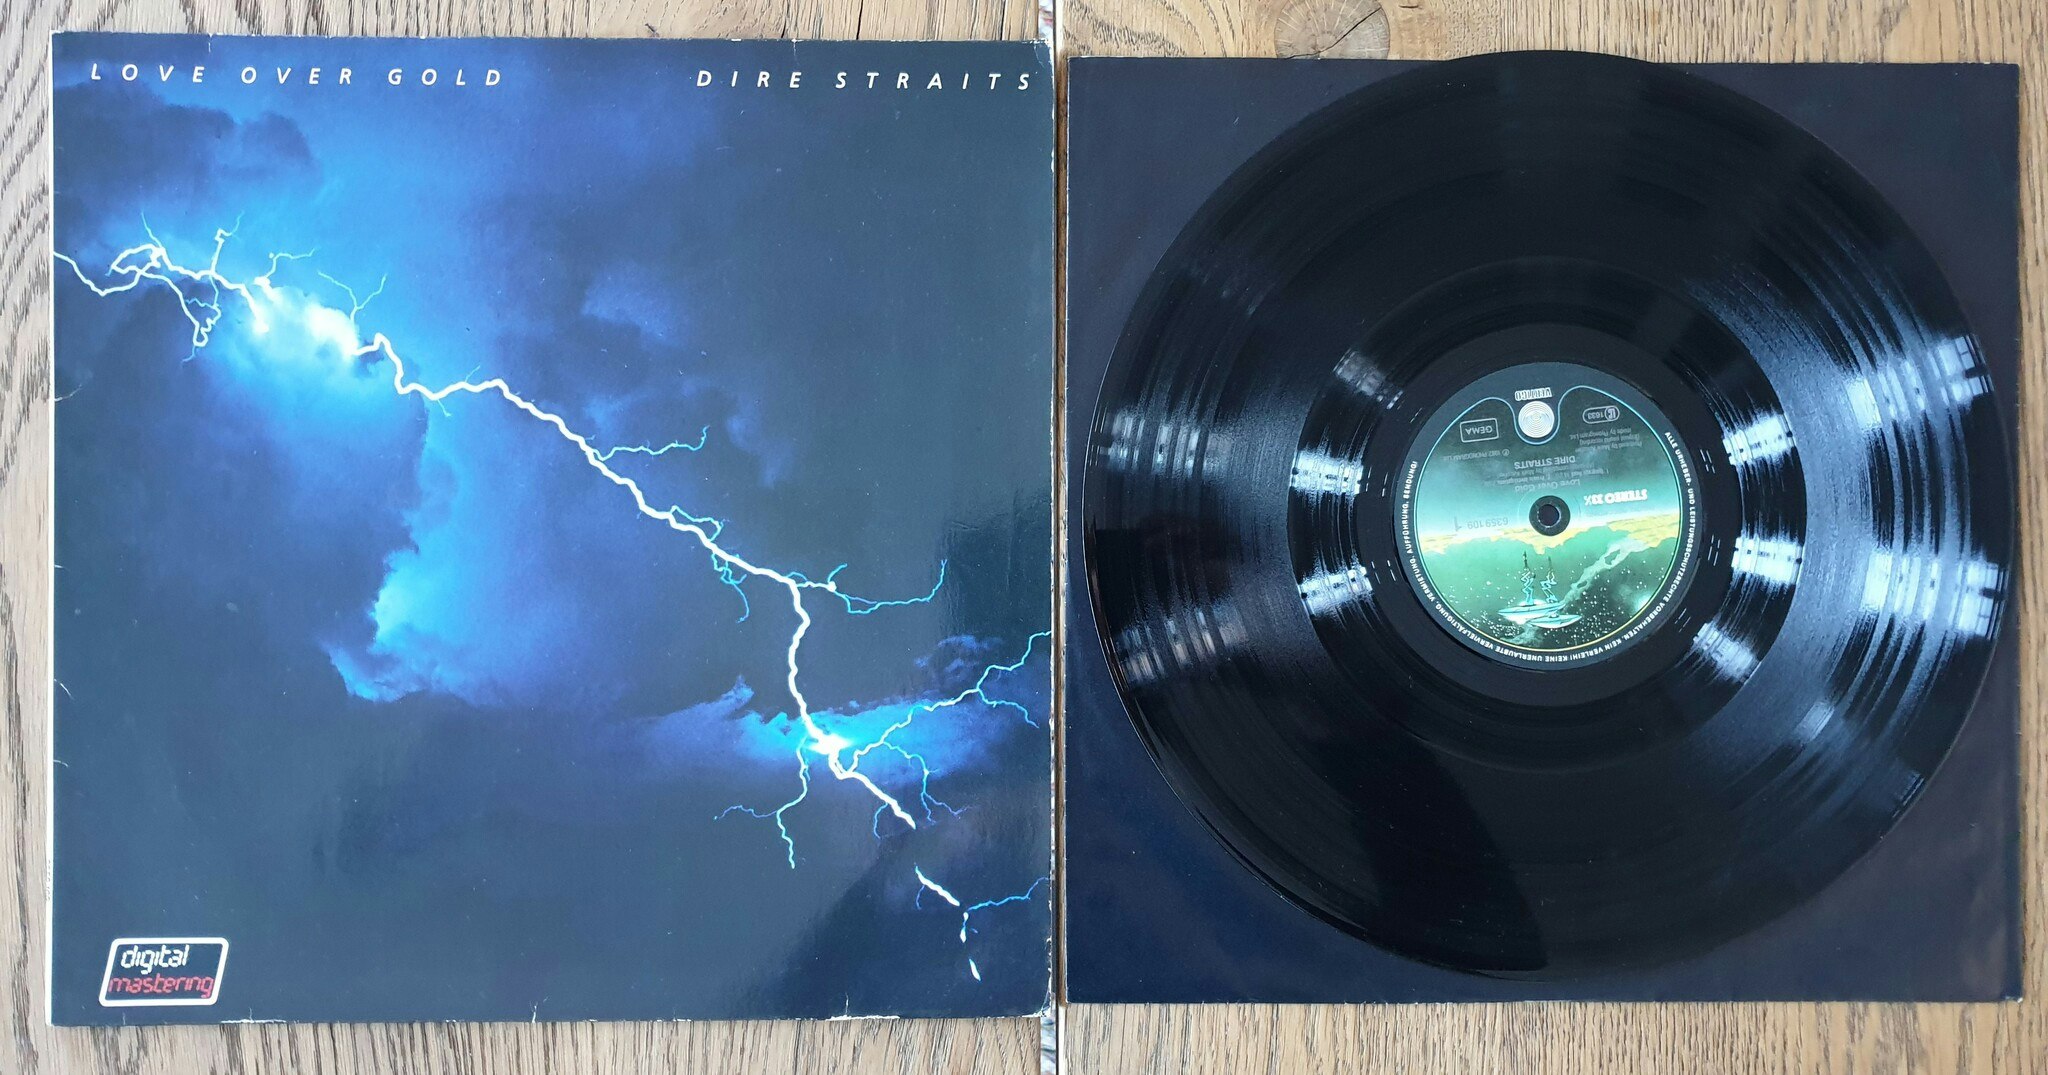 Dire Straits, Love over gold. Vinyl LP